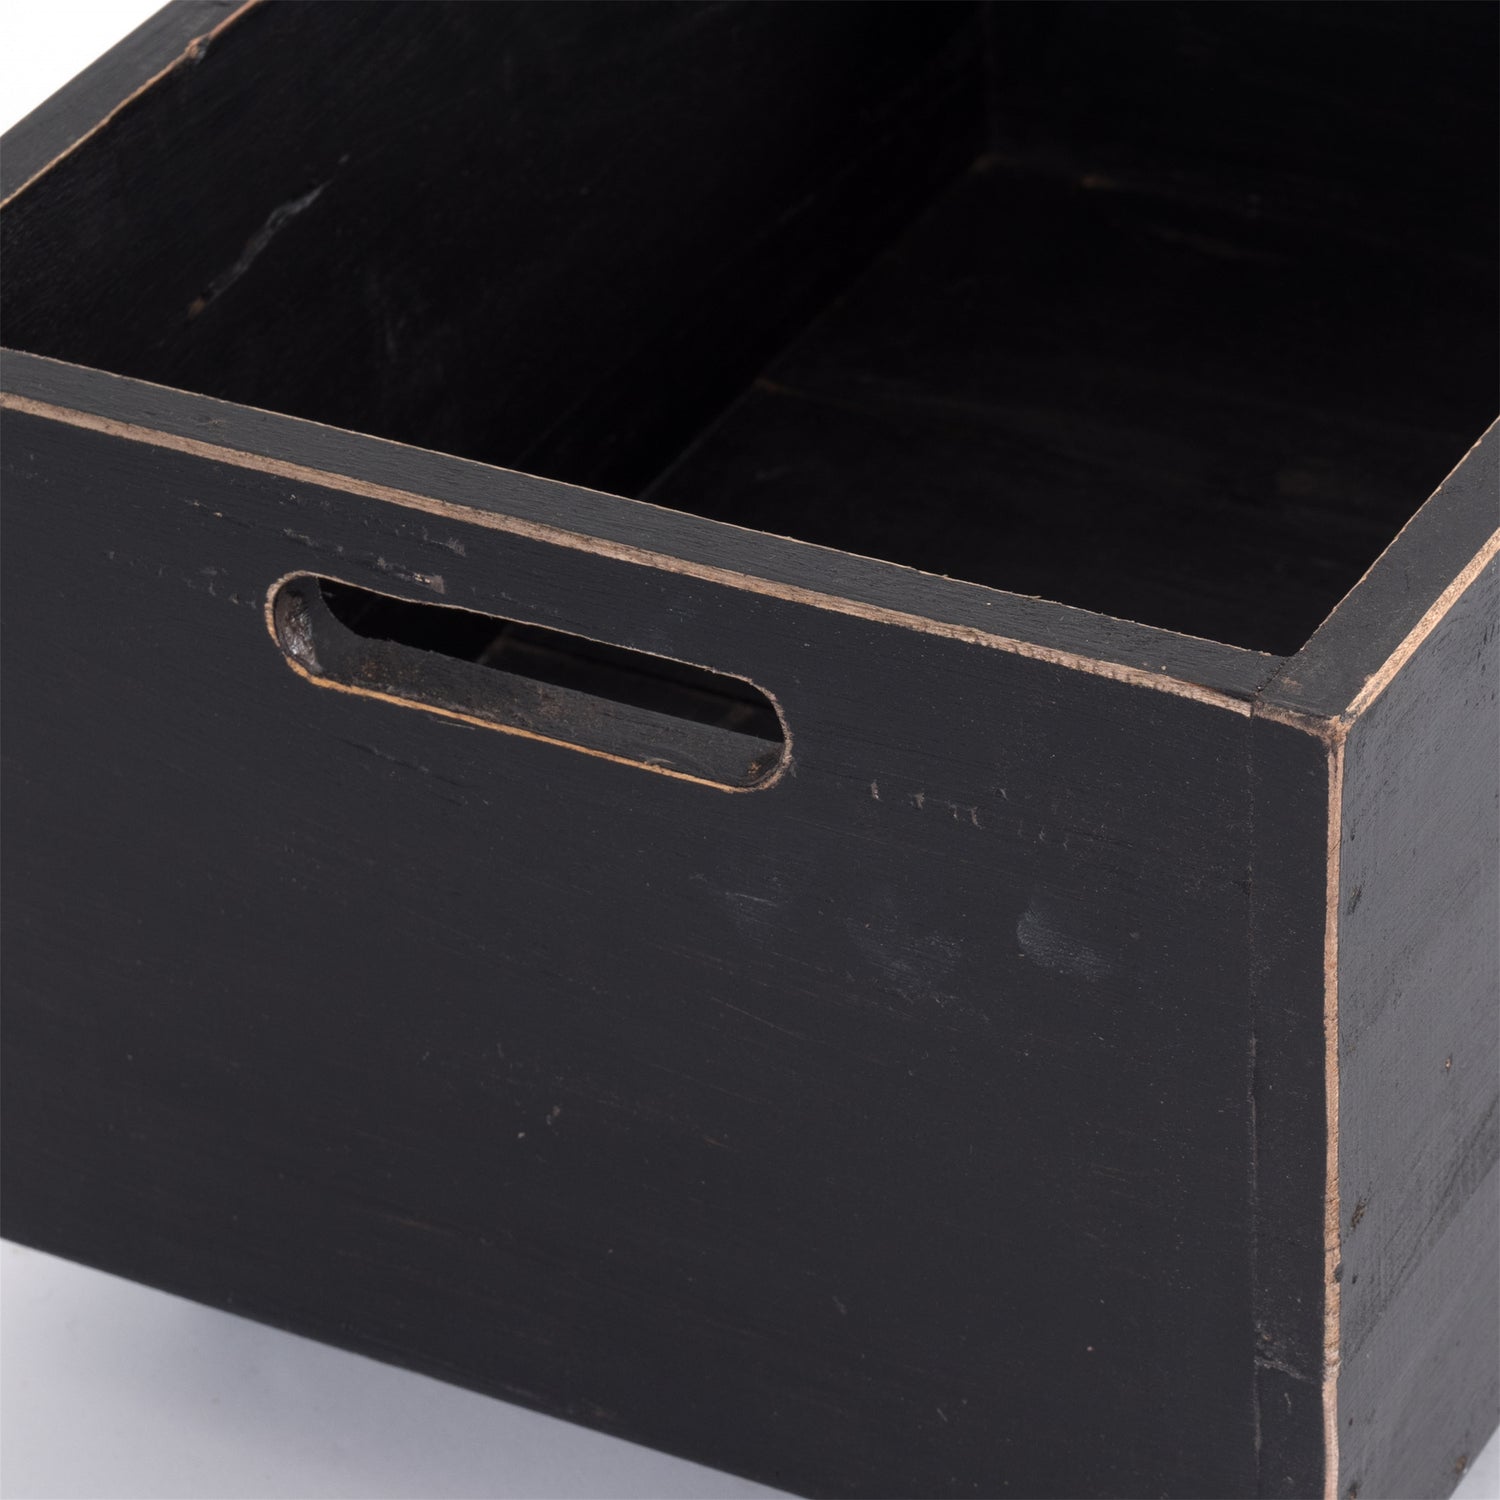 ROLLBARE HOLZKISTE "BOX" | 26x45x30 cm, Mahagoni | Aufbewahrung